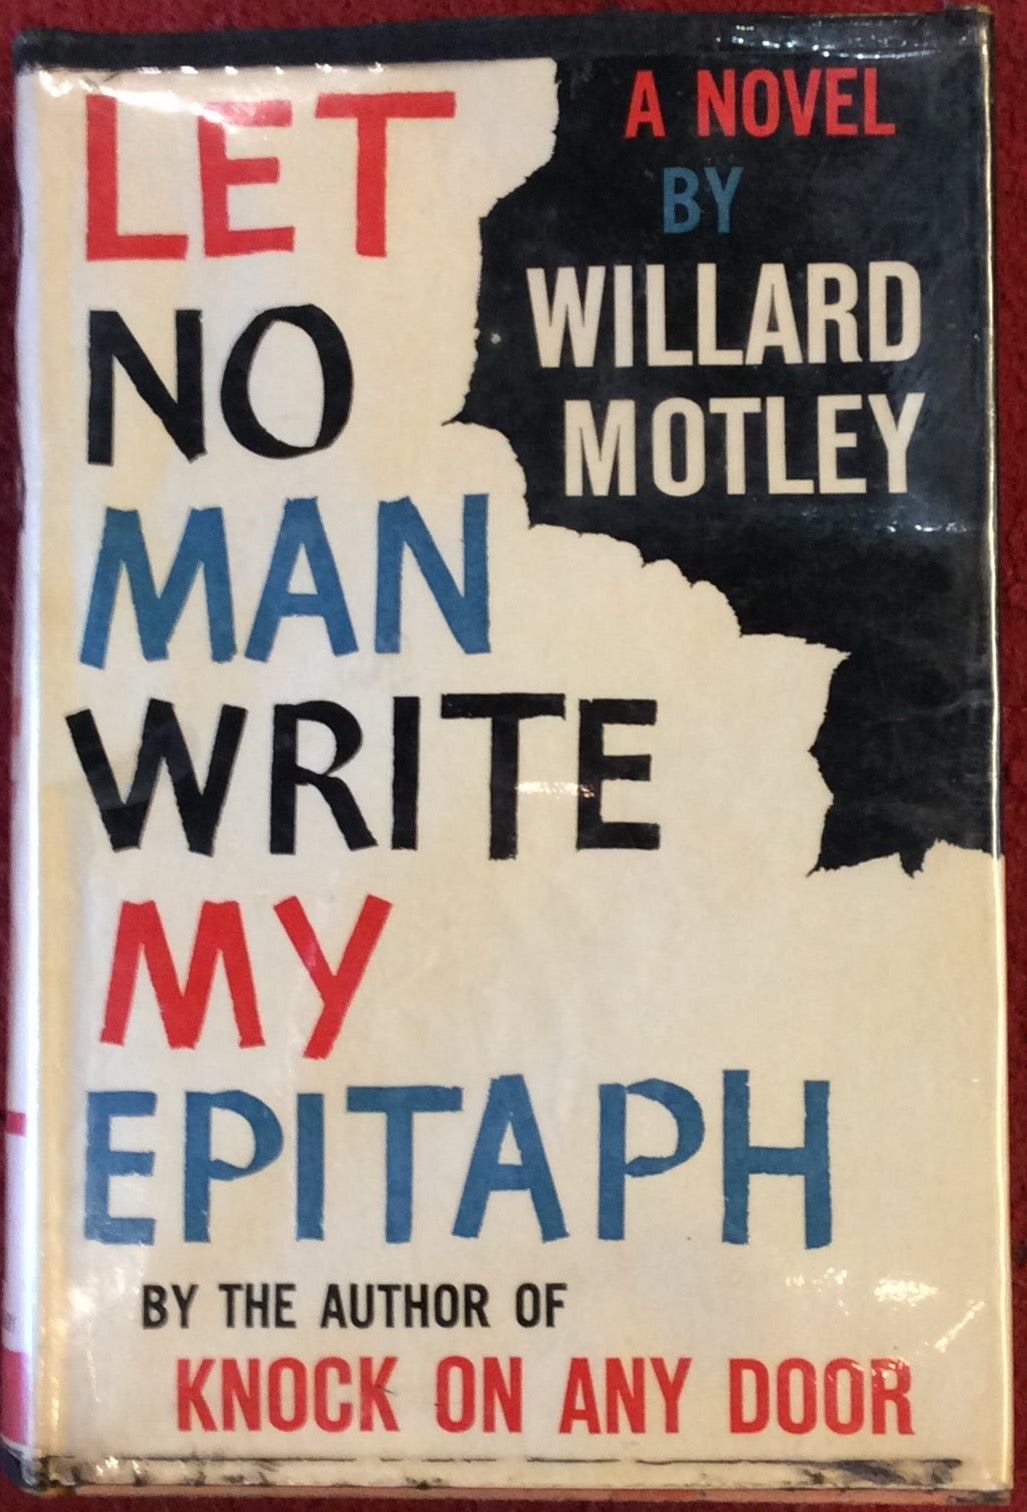 Let No Man Write My Epitaph, Willard Motley, Random House, 1958 *